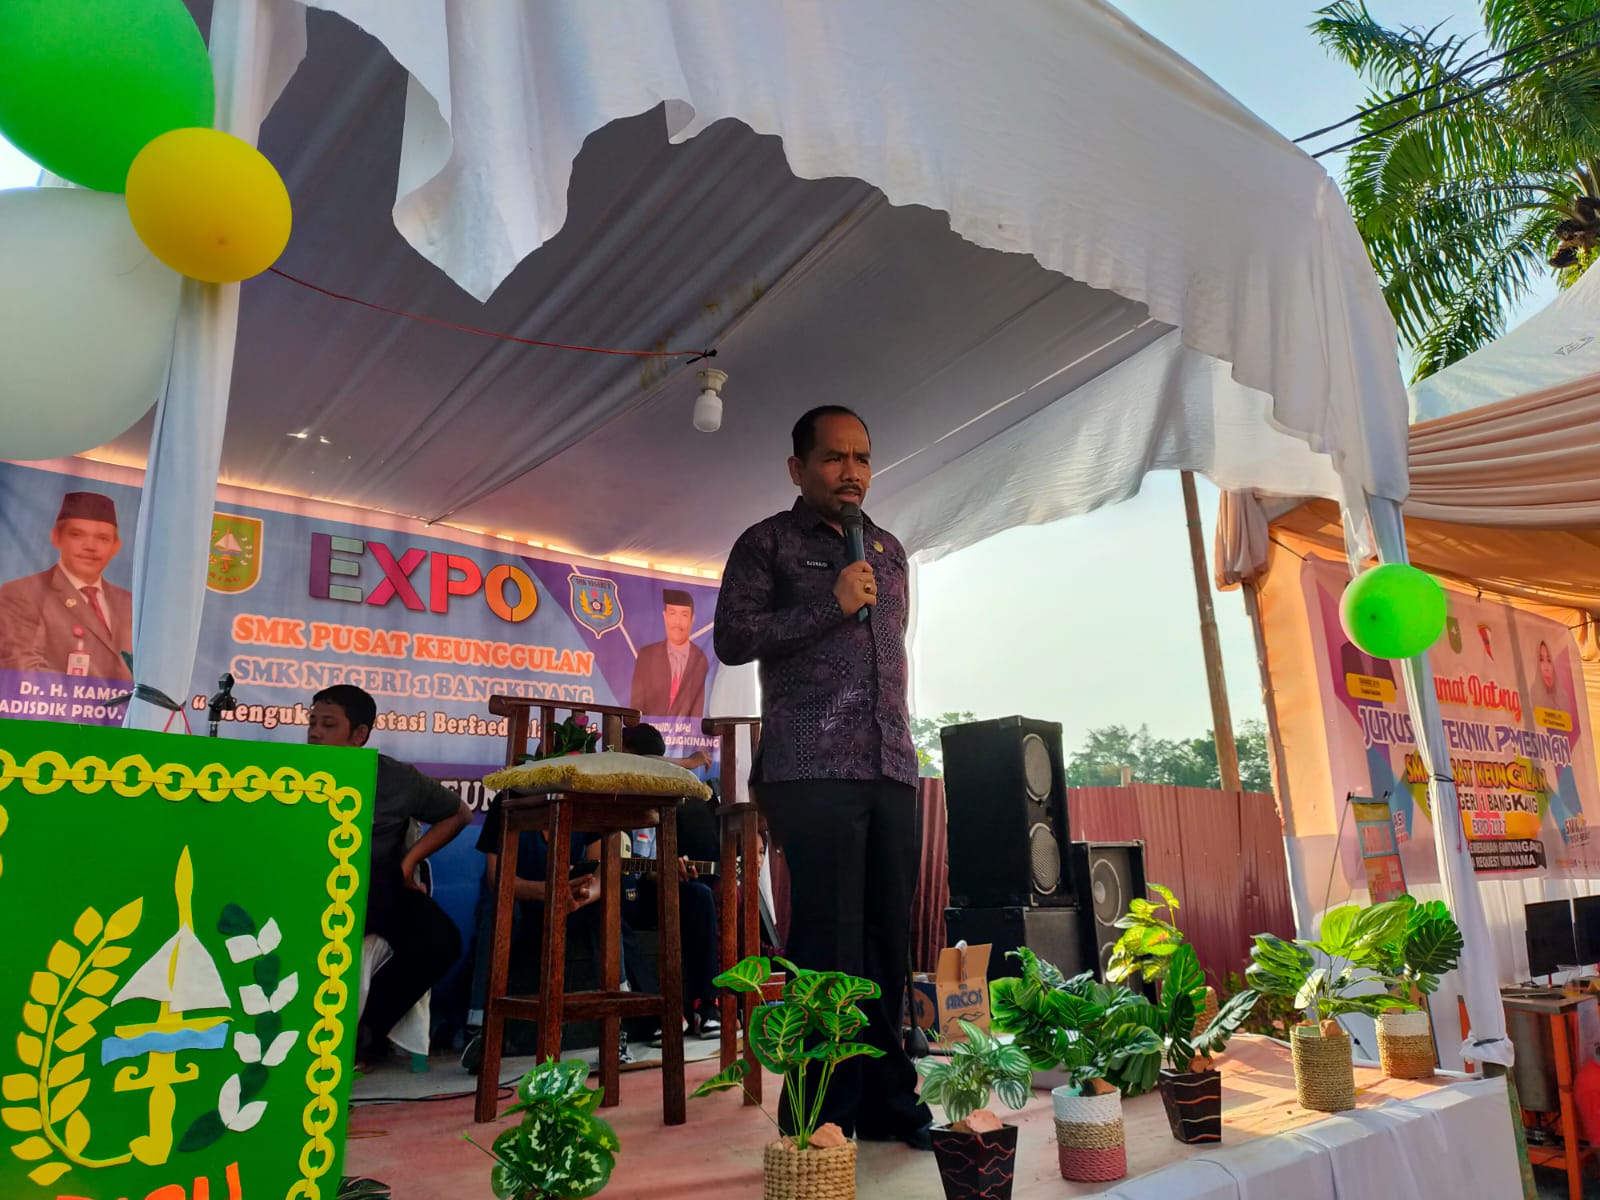 Dihari Ulang Tahun, SMK Negeri 1 Bangkinang Melakukan Expo Pameran Produk Keunggulan